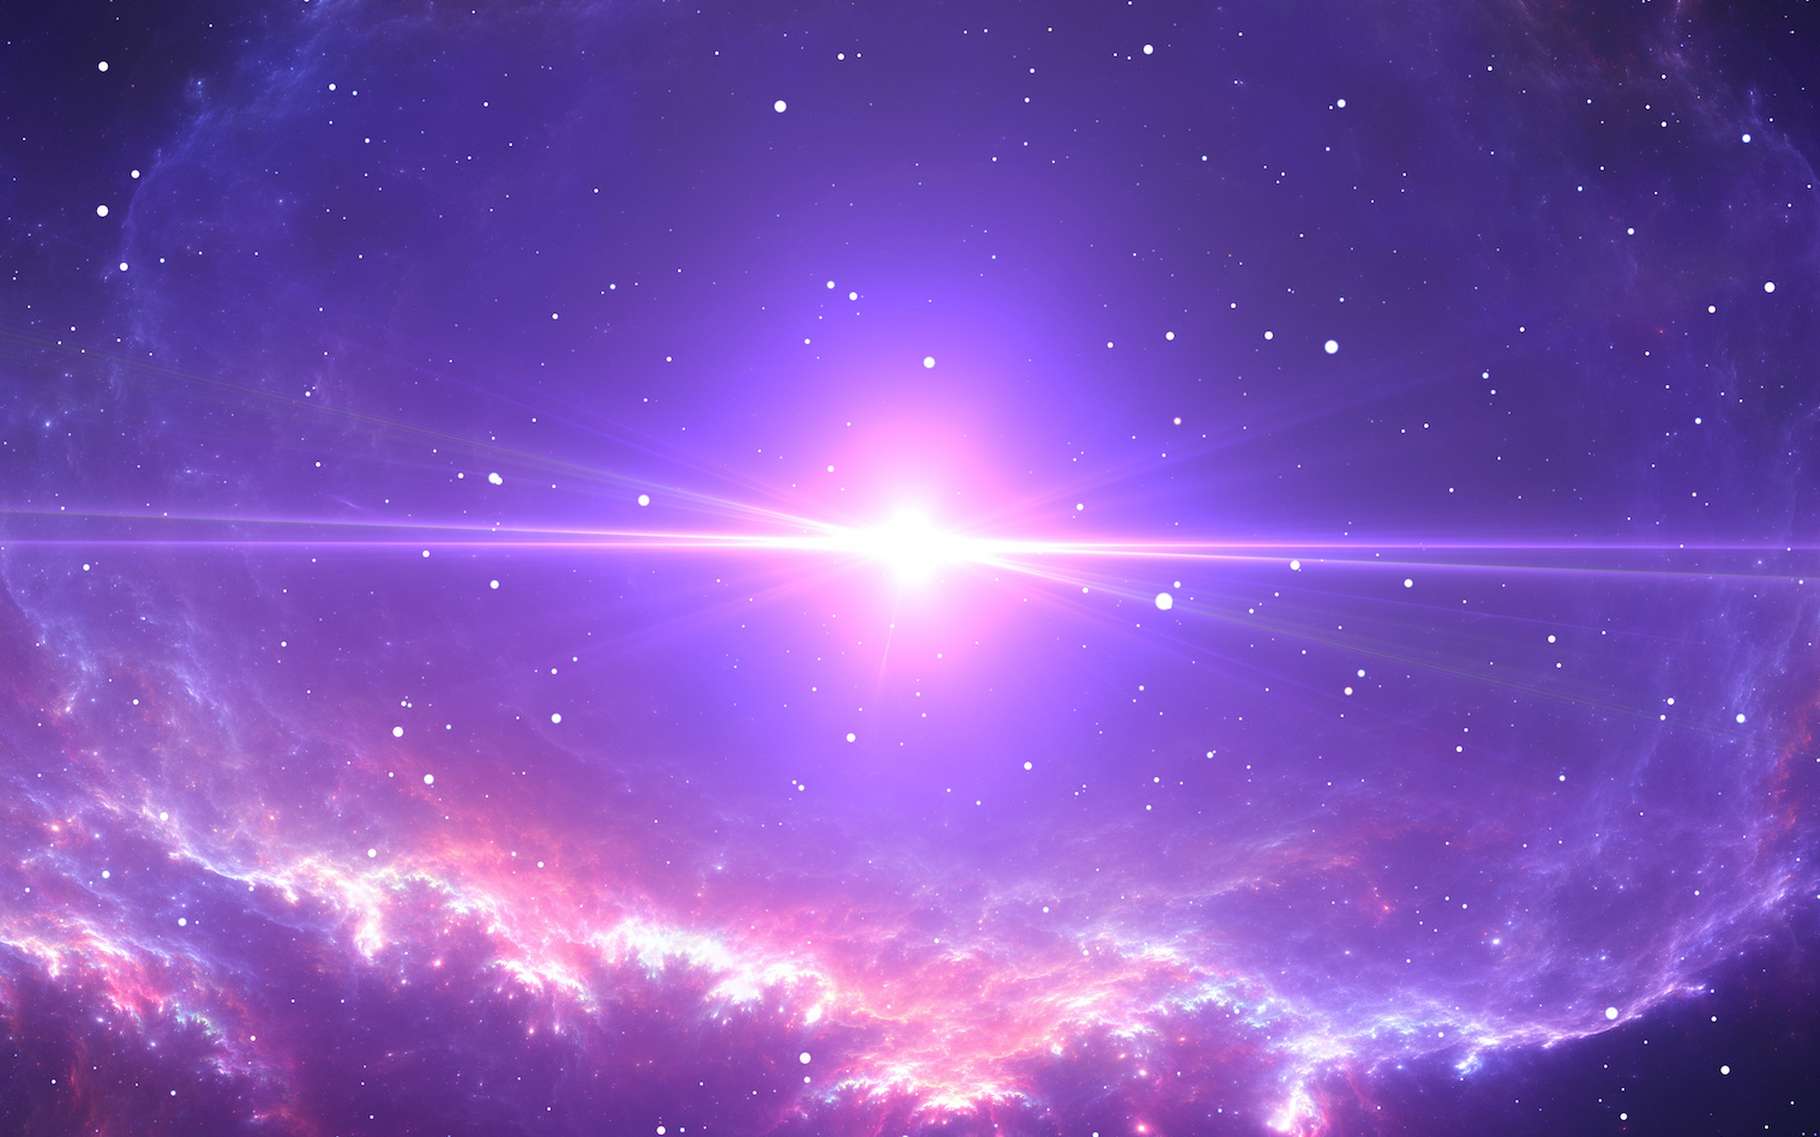 Illustration de l'explosion d'une supernova. © Peter Jurik, Adobe Stock